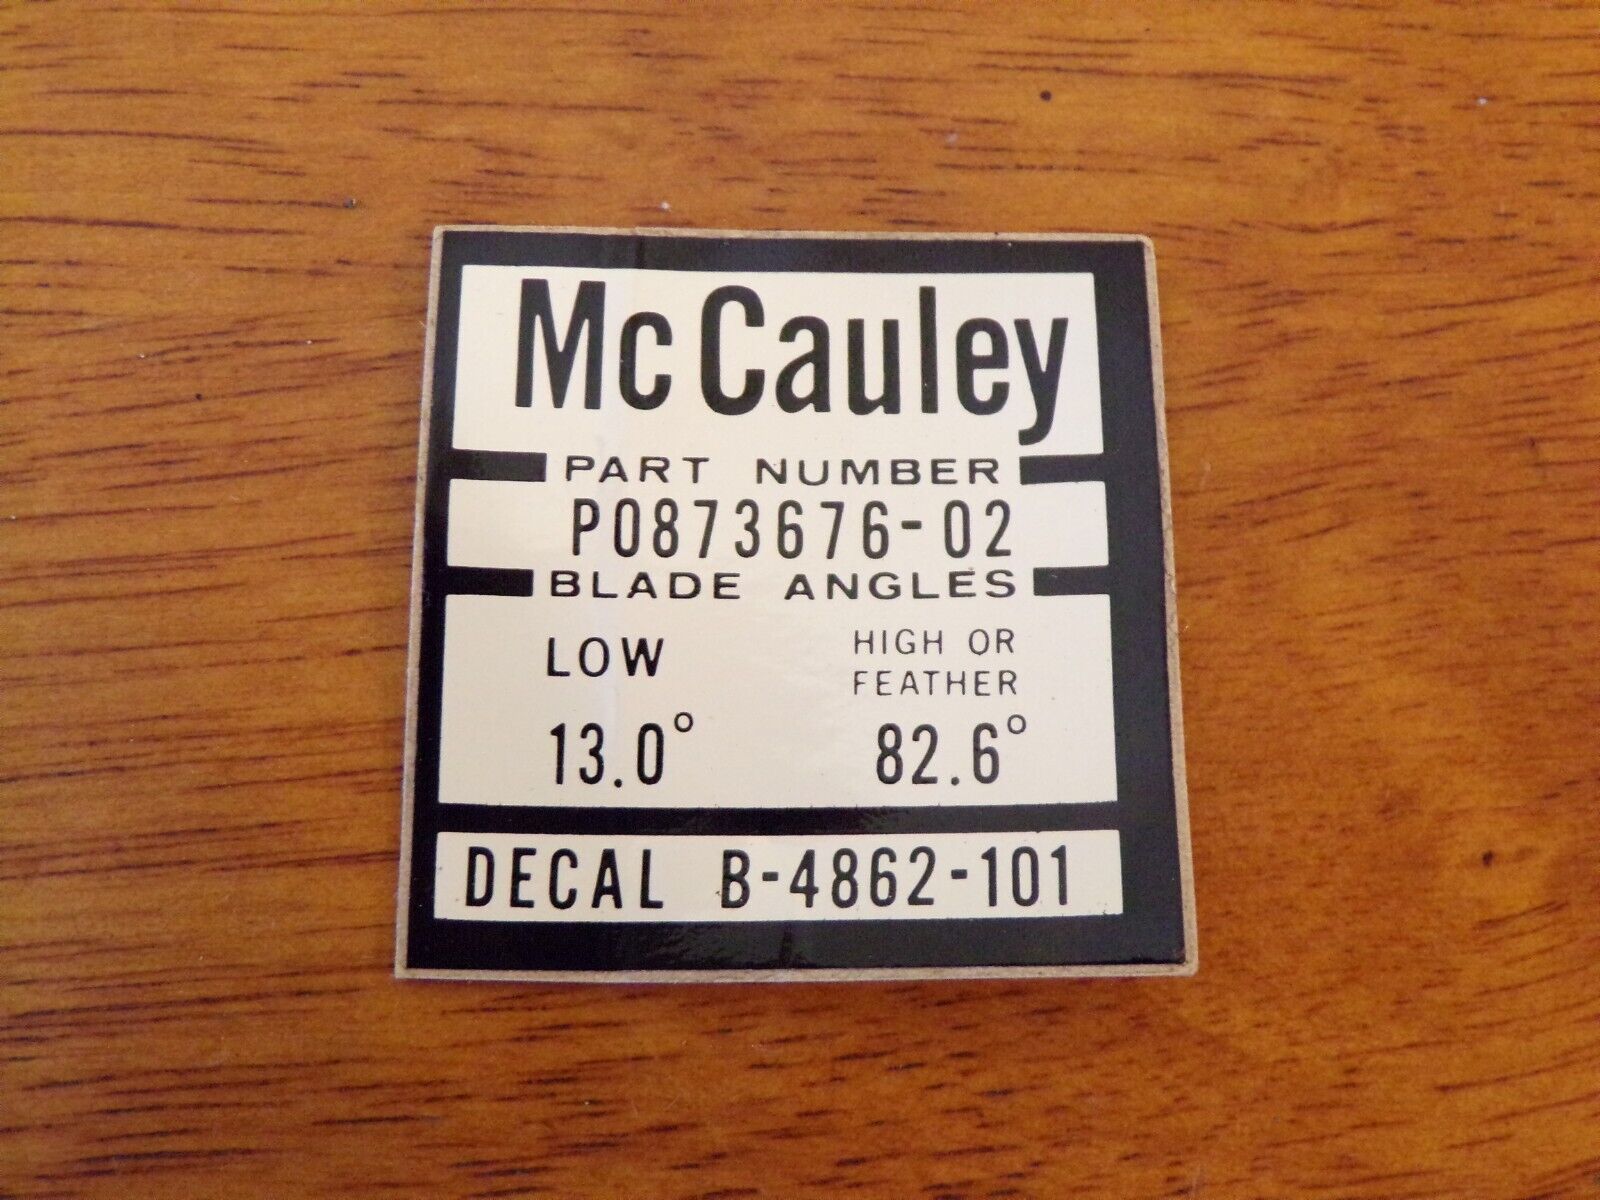 McCauley Propeller Decal B-4862-101 for Prop P0873676-02